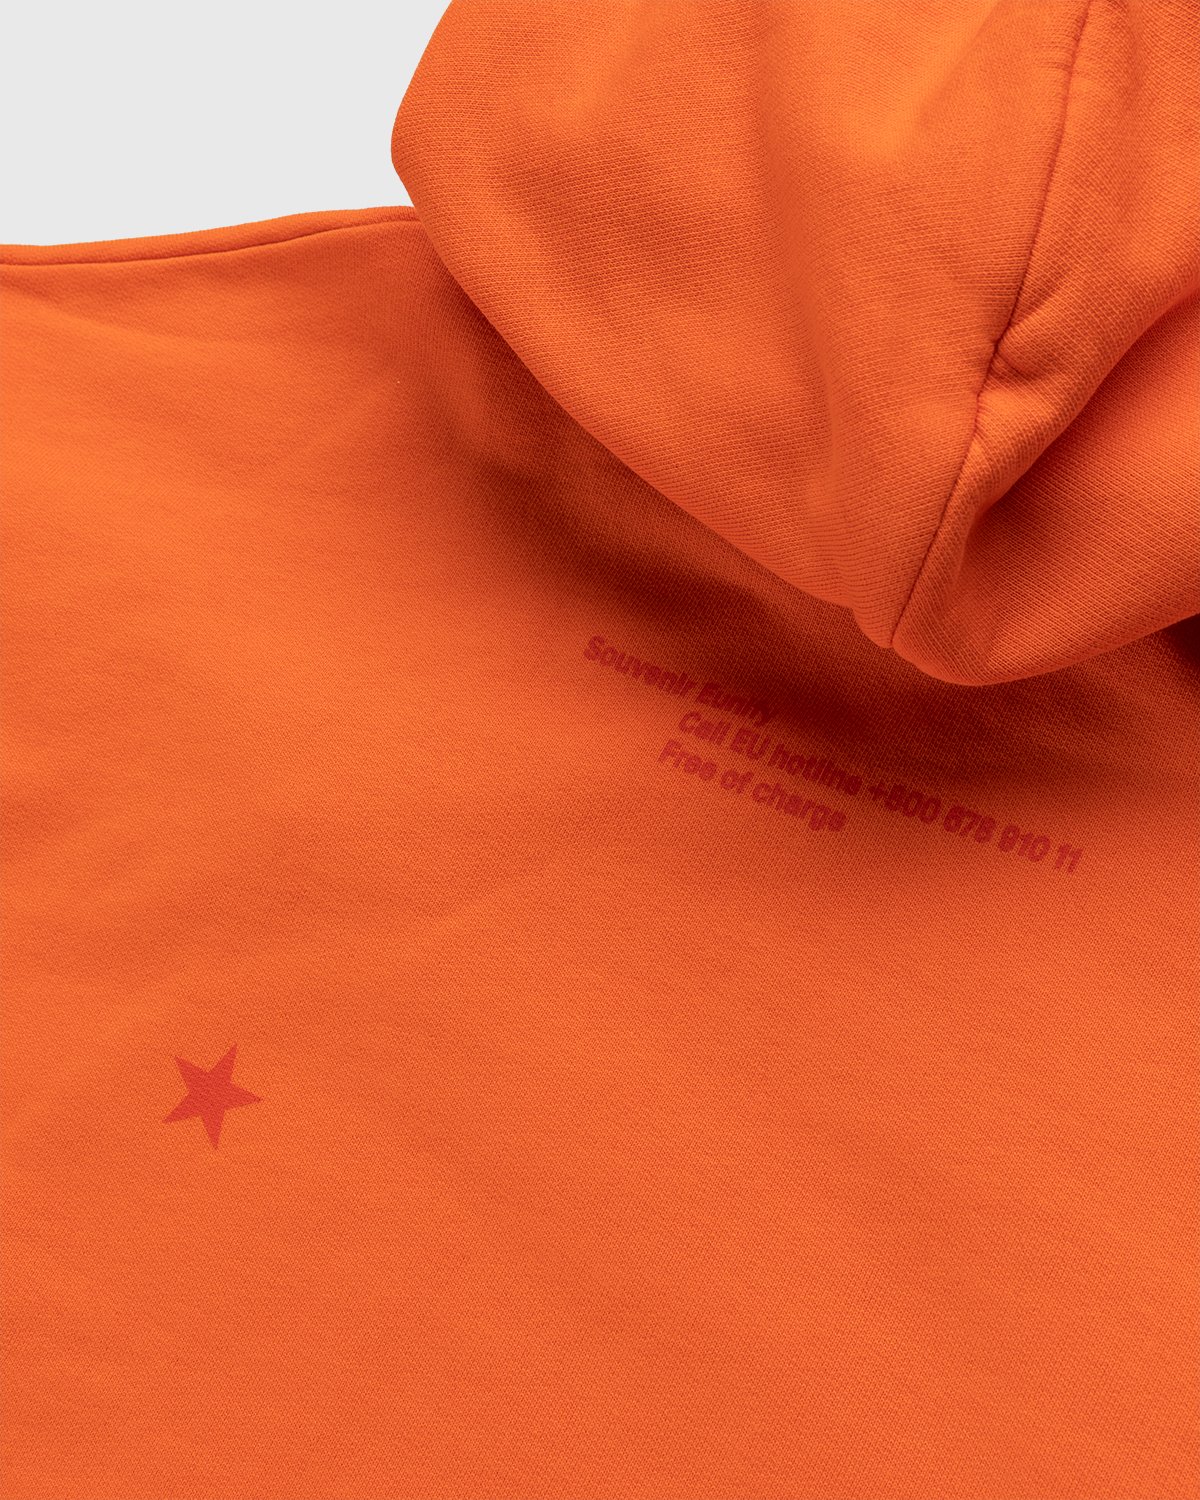 Souvenir - Eunify G-Dye Hoodie Flame - Clothing - Orange - Image 6